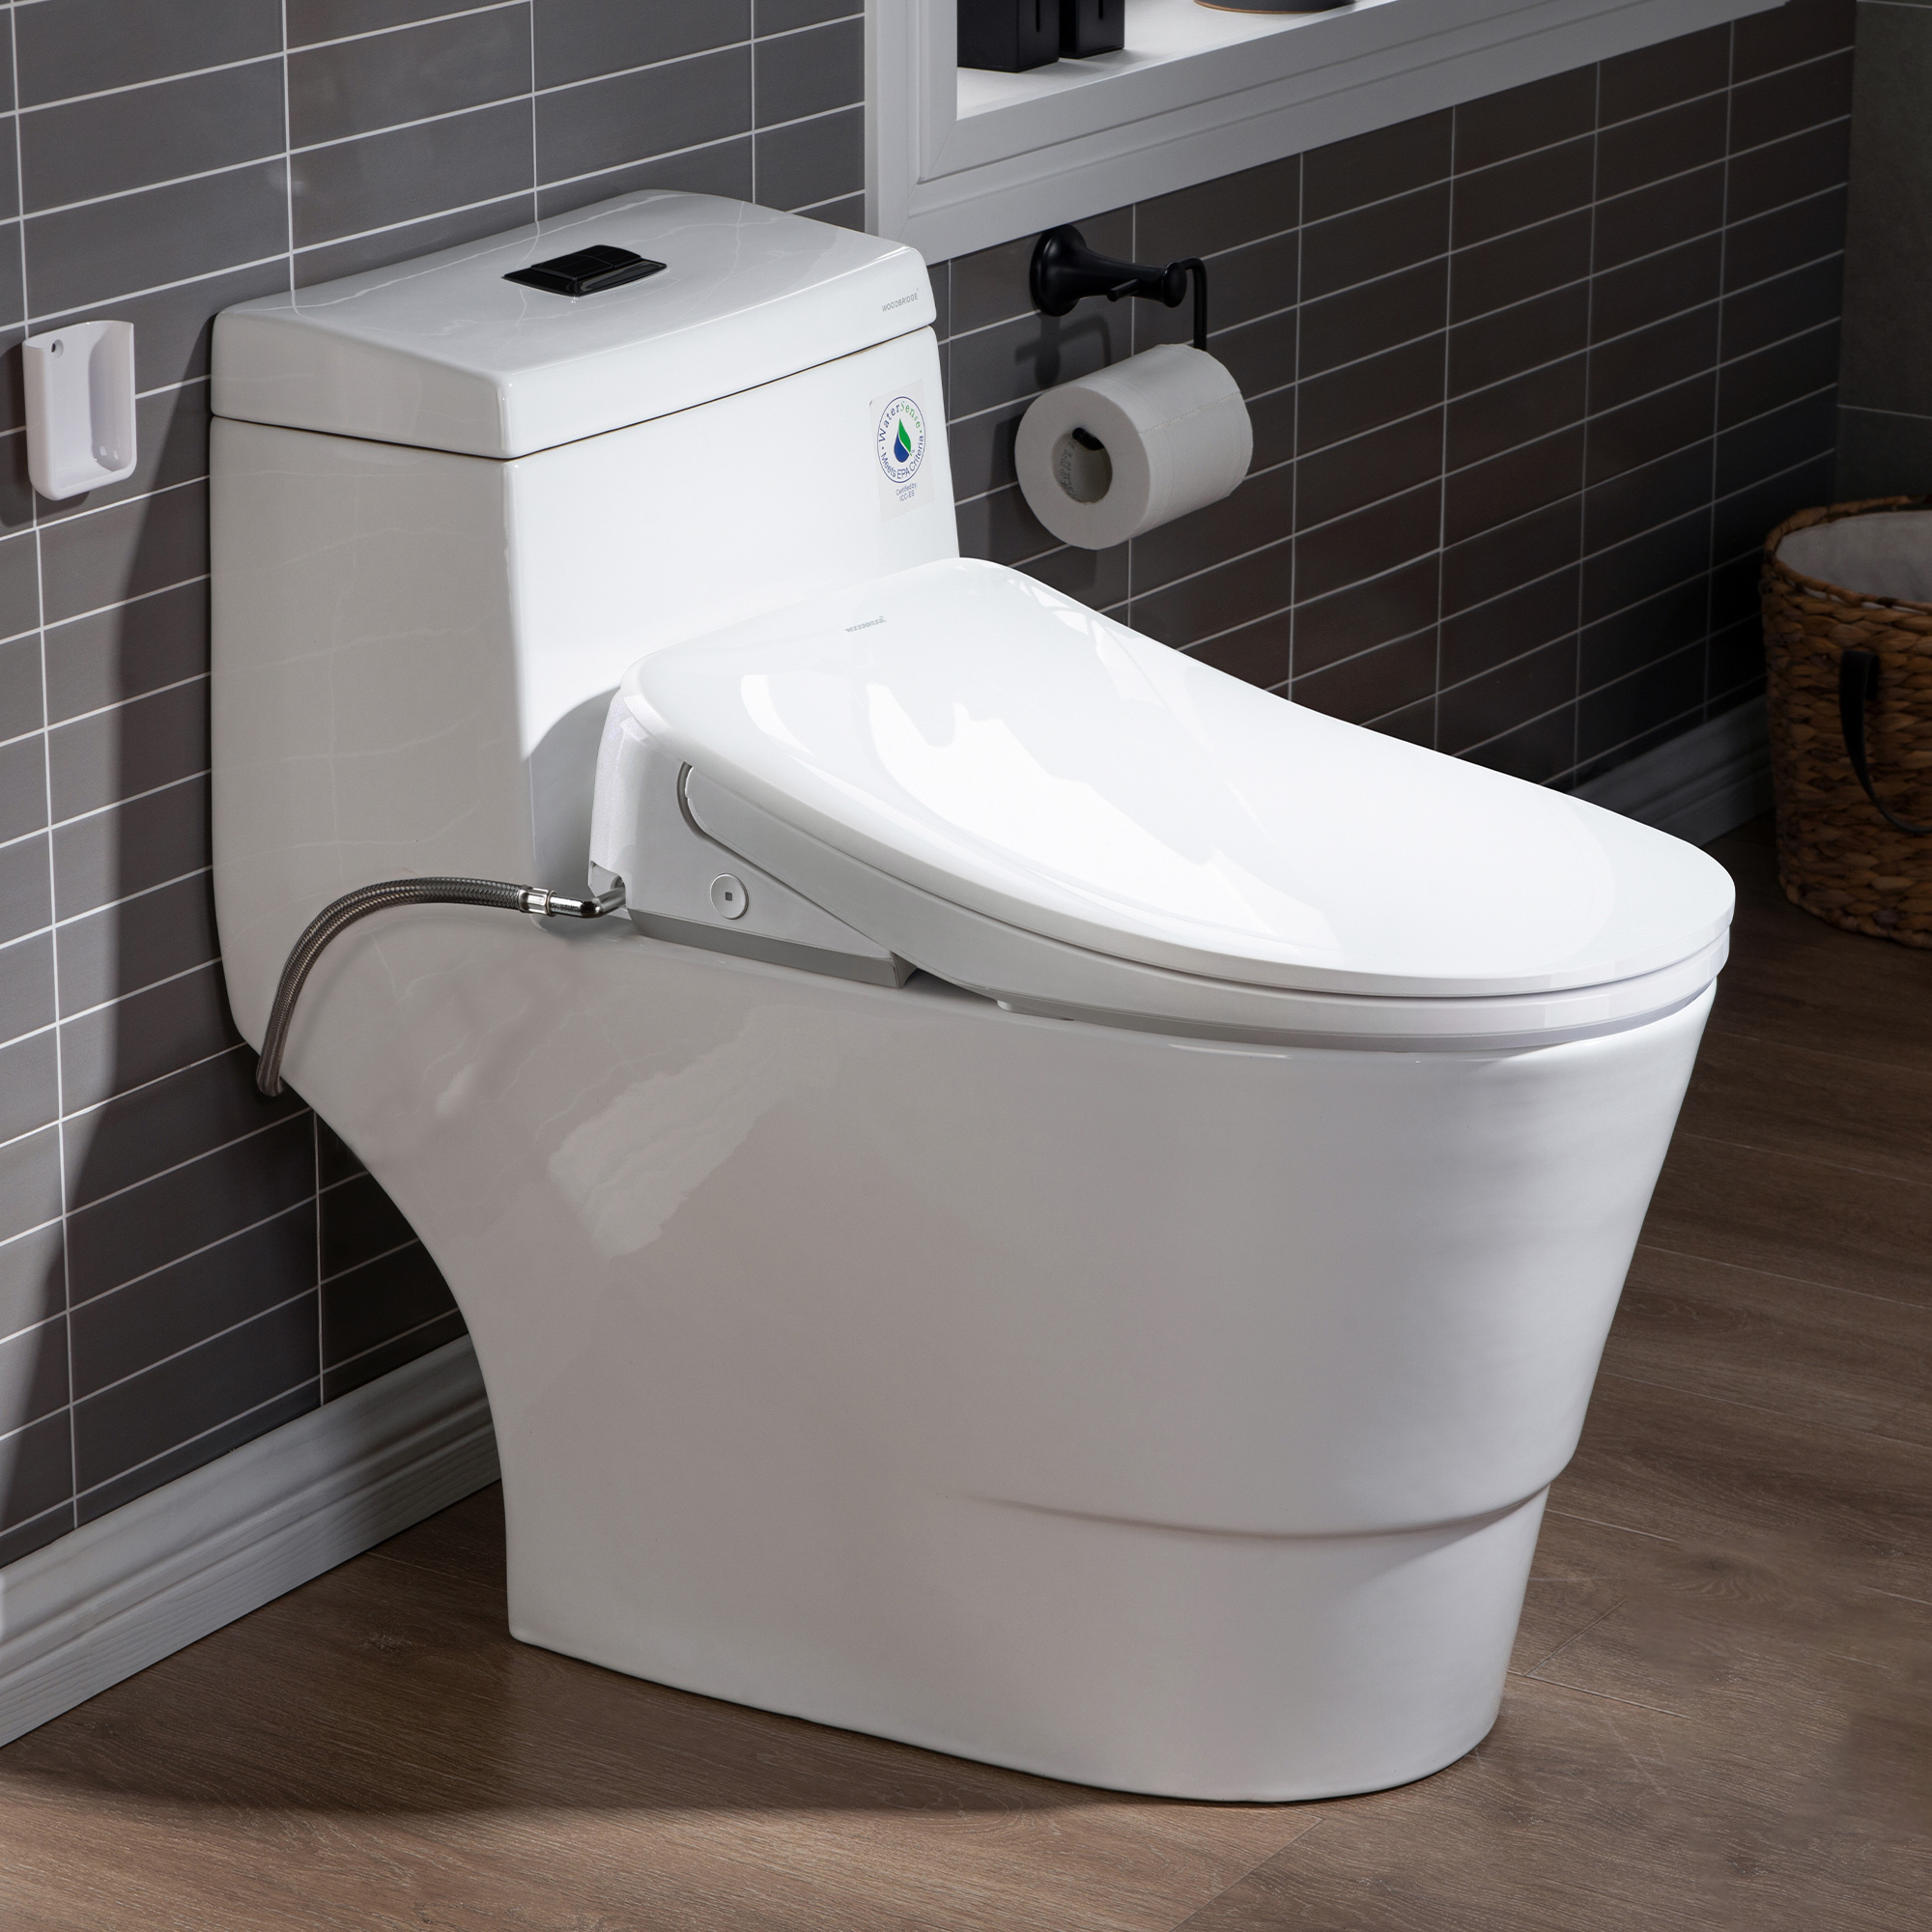  WOODBRIDGE Elongated 1-Piece Toilet with Advanced Auto Open & Close Bidet Smart Toilet Seat, Child Wash, Chair Height, 1000 Gram MaP Flushing Score, 1.28 GPF Dual, Water Sensed_15212